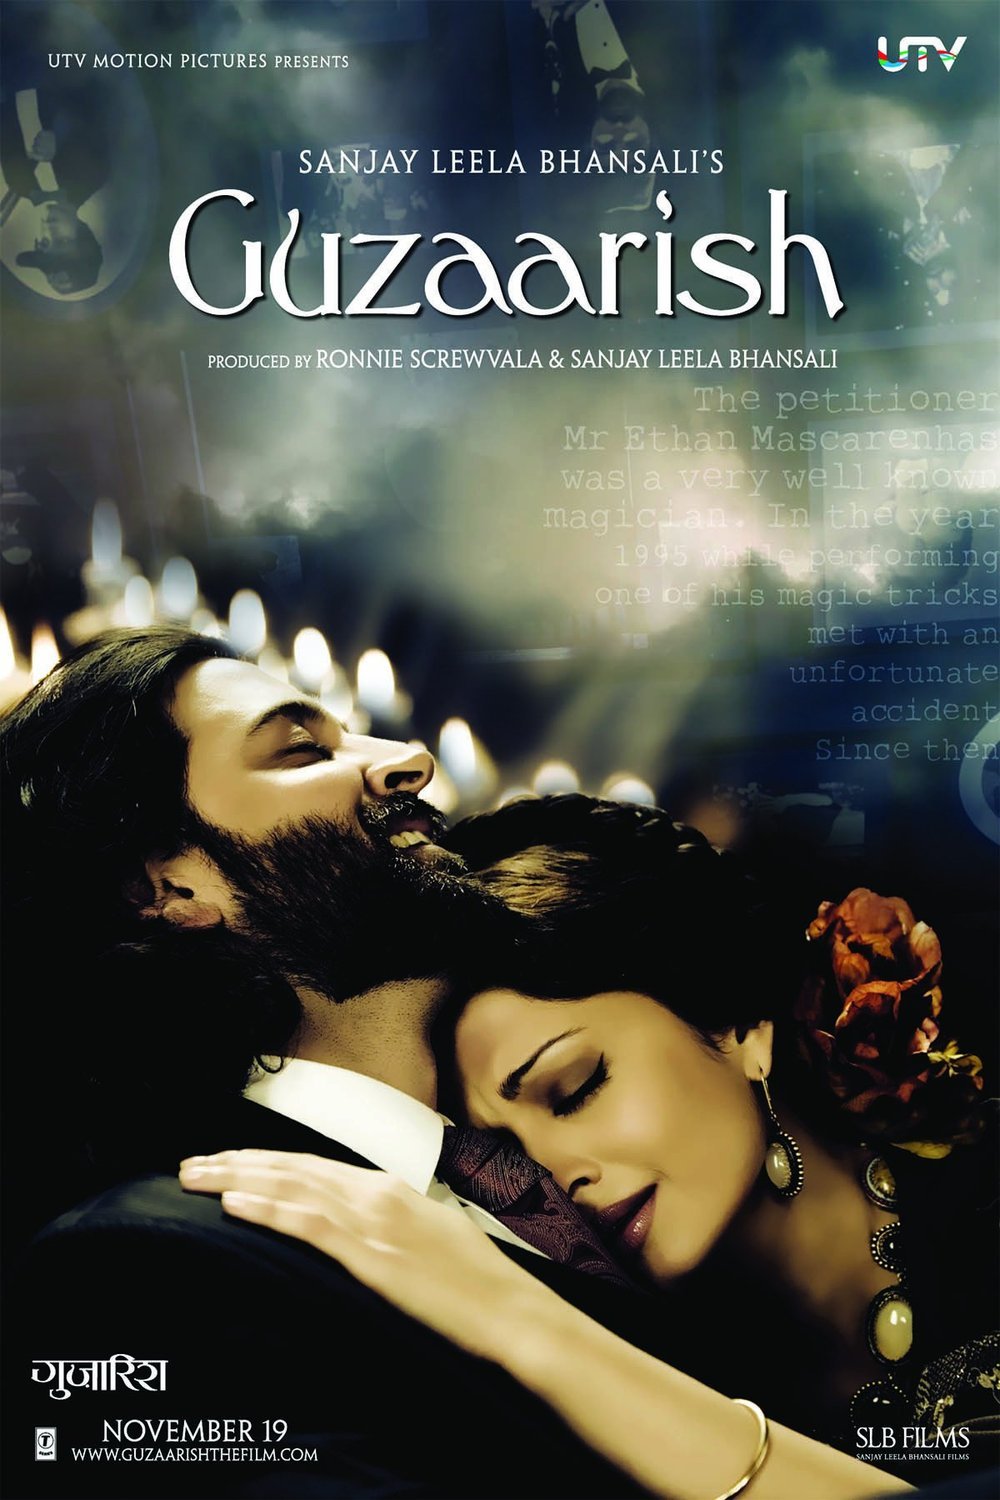 Hindi poster of the movie Guzaarish